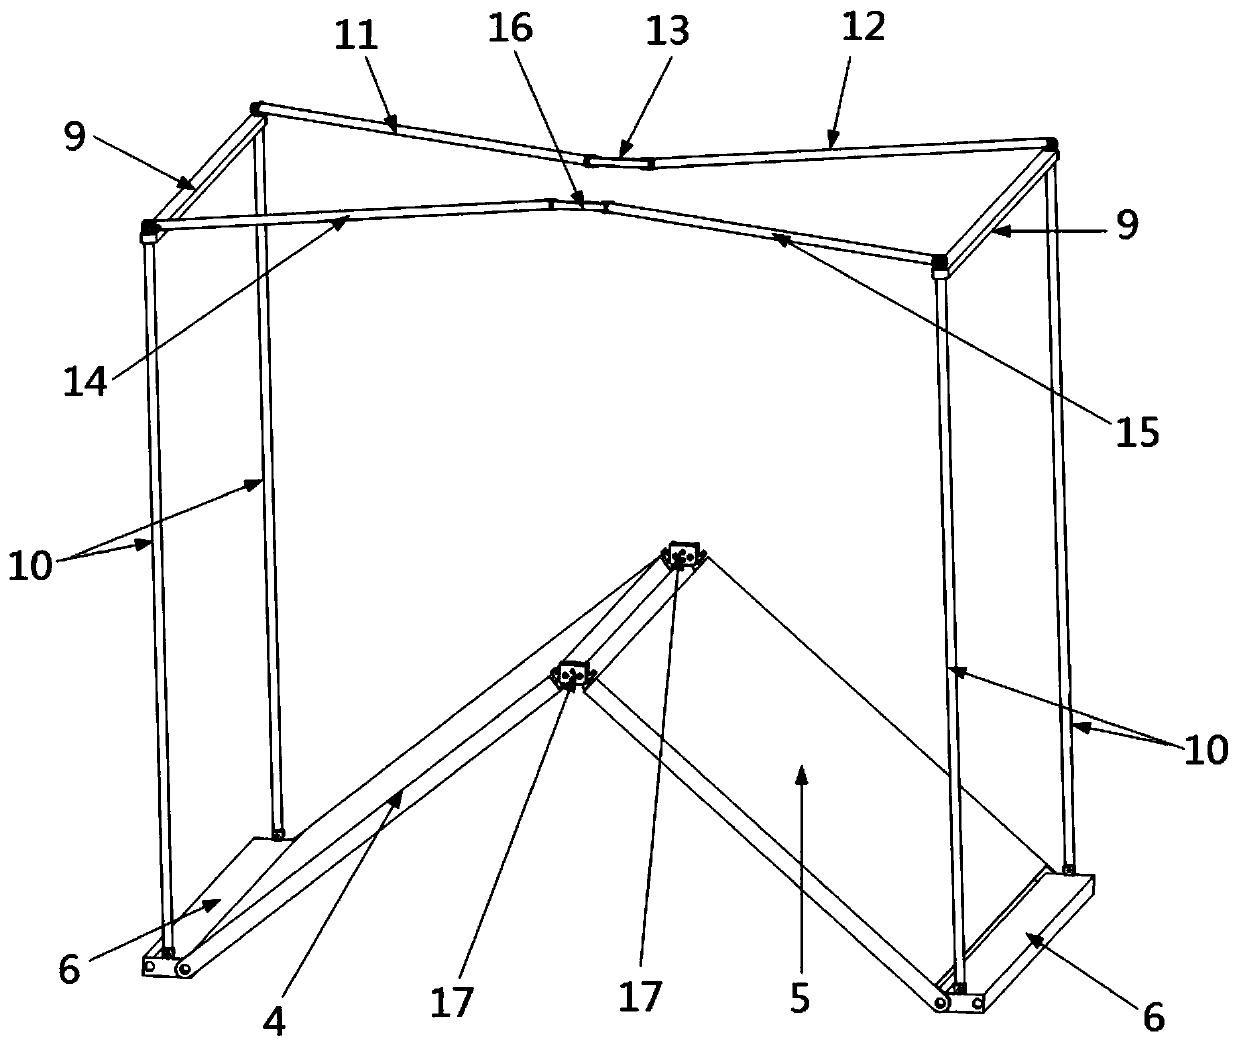 Flat plate folding and unfolding unit and flat plate folding and unfolding antenna mechanism